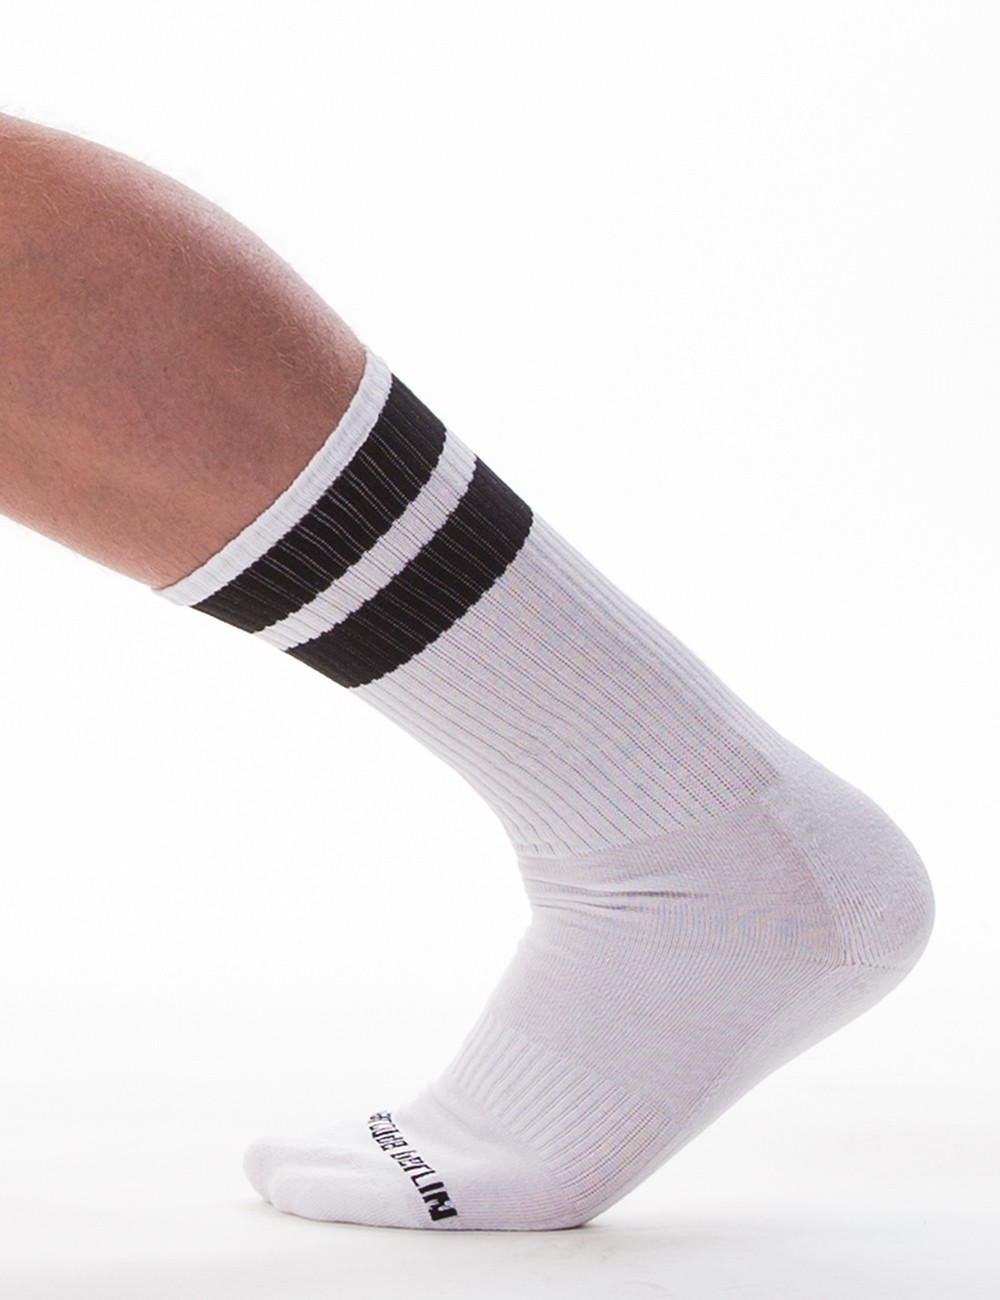 Gym Socks - White-Black